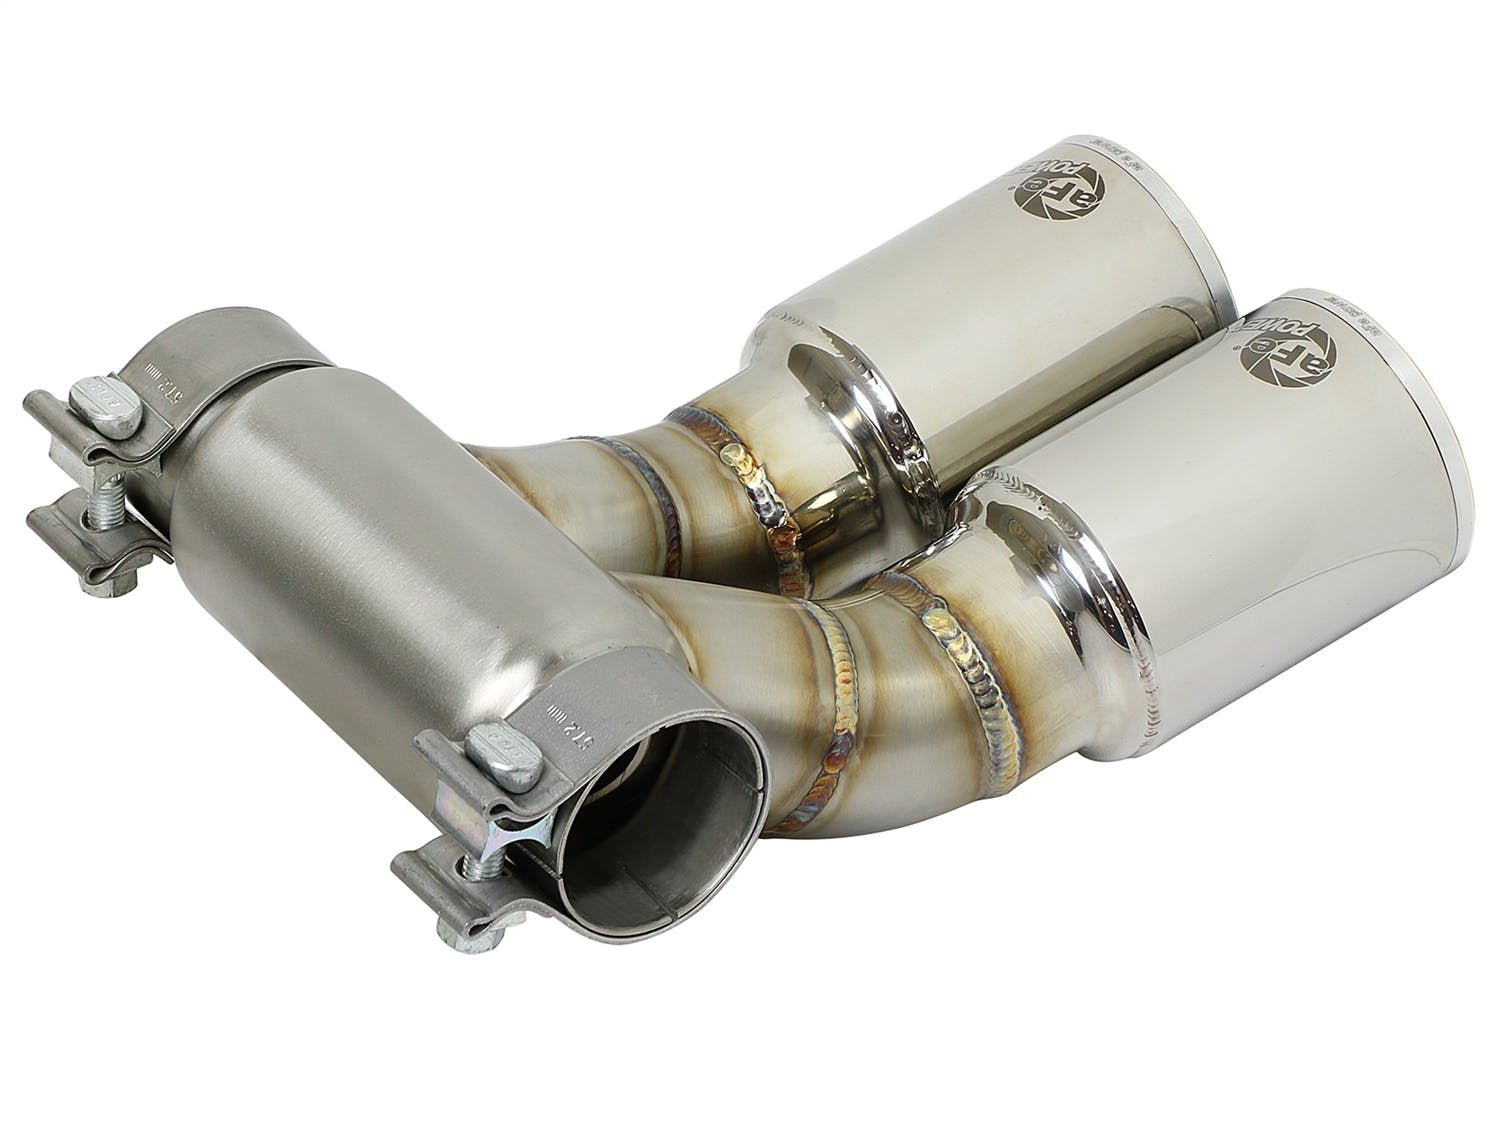 AFE 49C36413-P aFe Power Exhaust Tip Upgrade